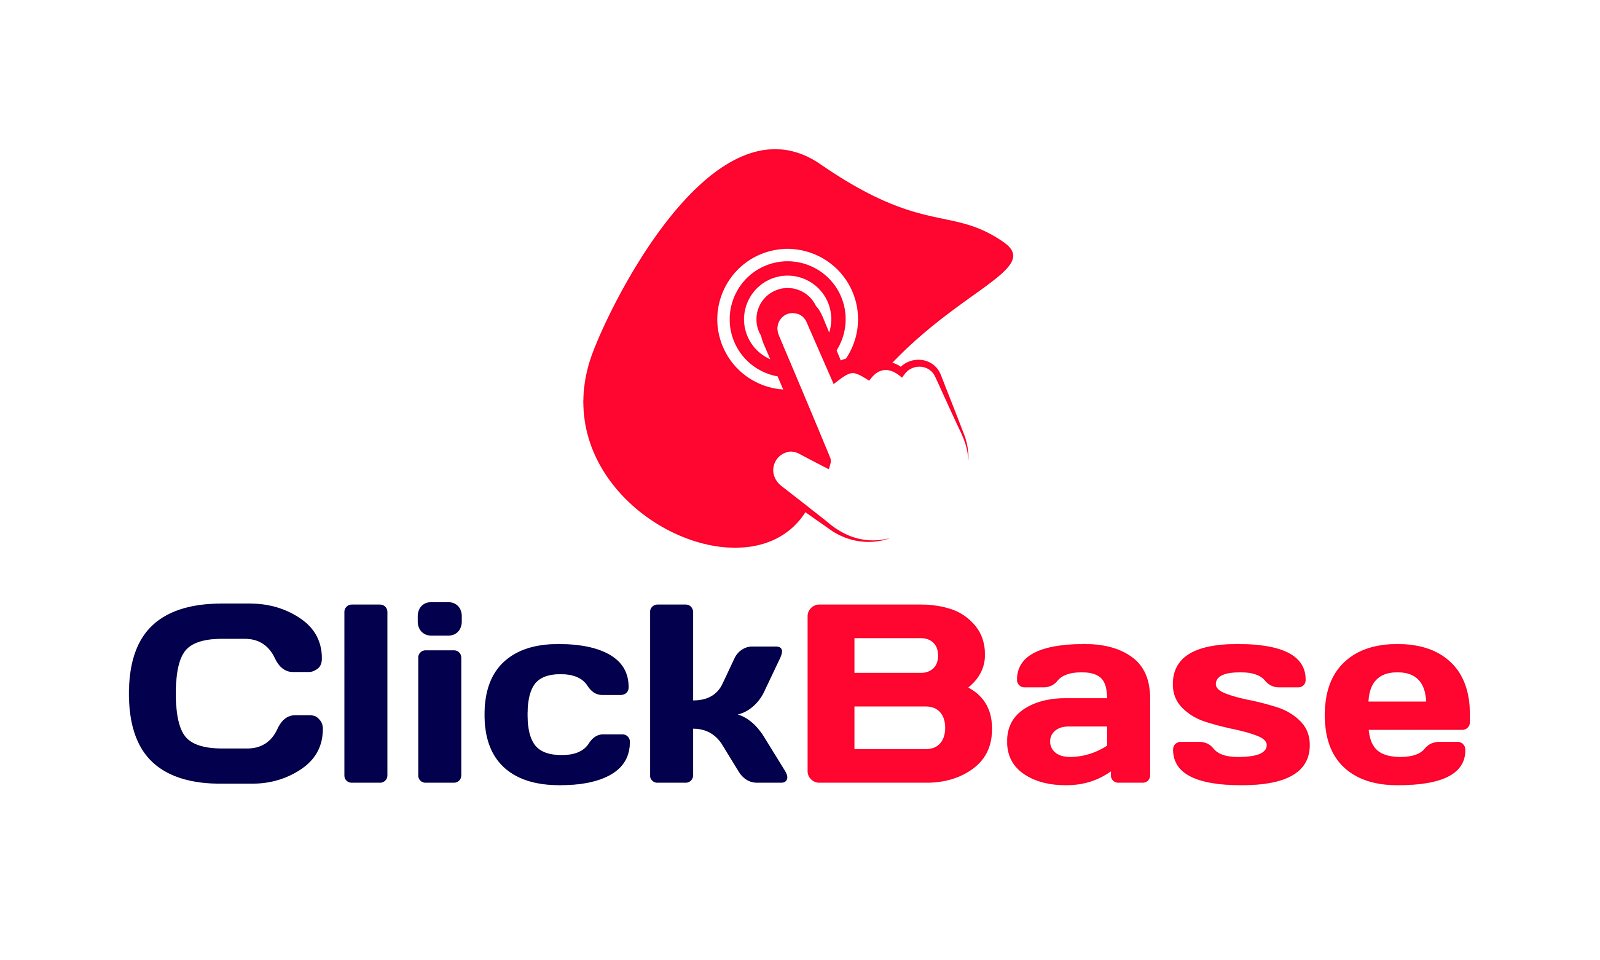 ClickBase.com - Creative brandable domain for sale